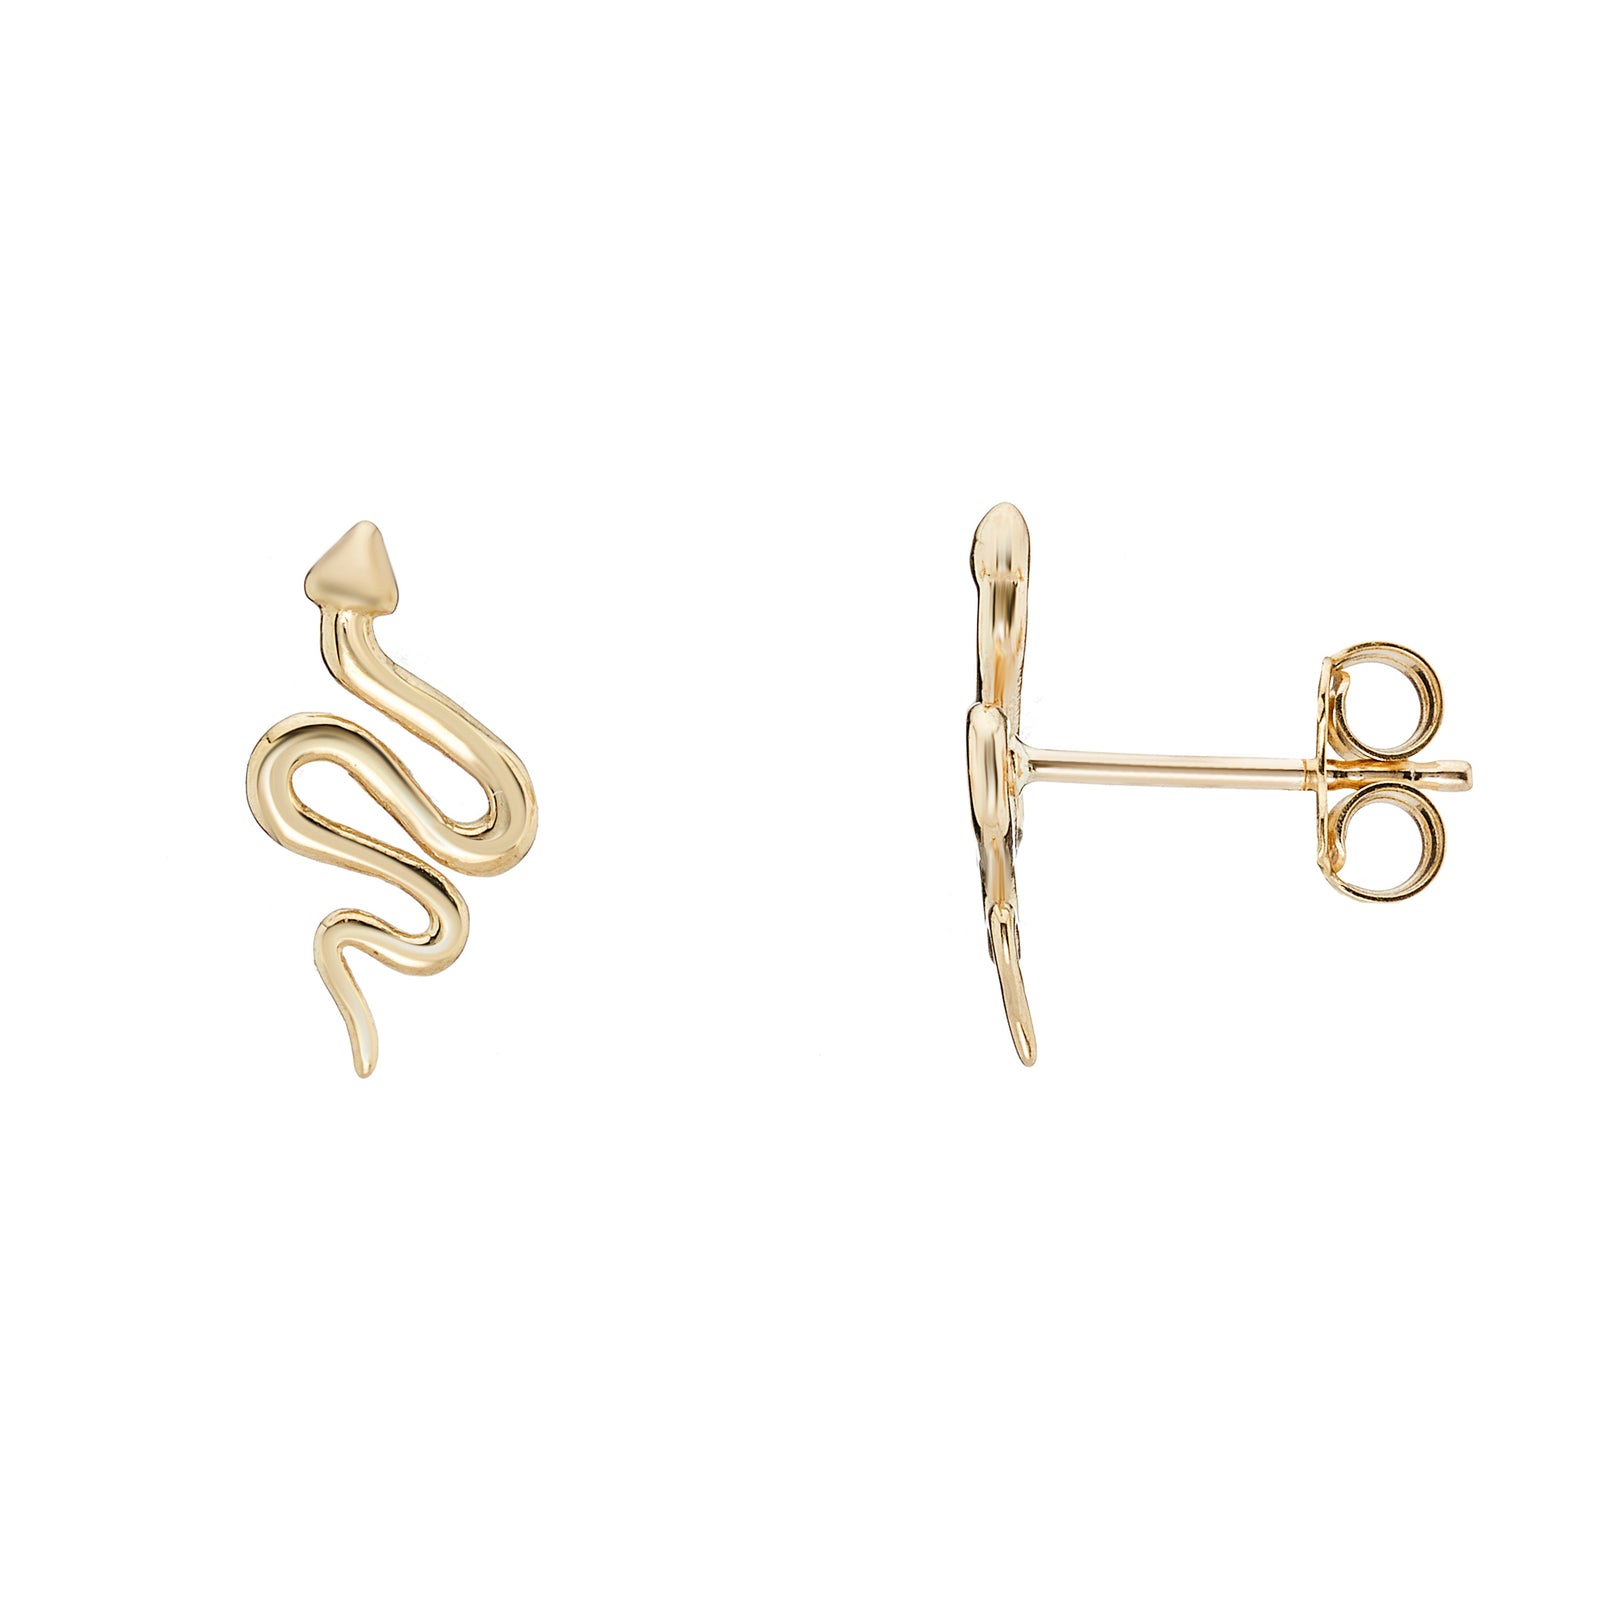 9ct gold large snake stud earrings